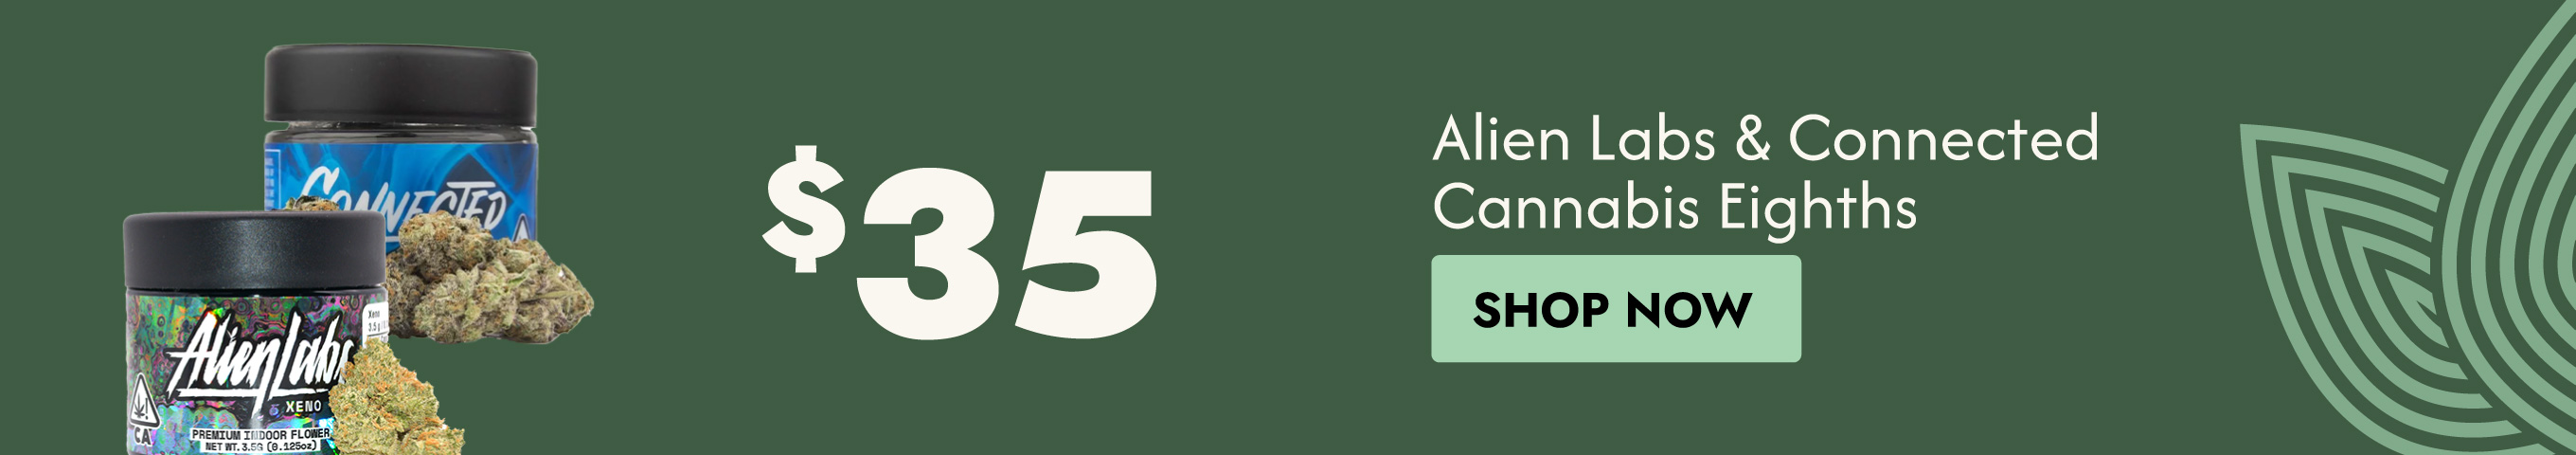 Cannabis Promo, Cannabis Sales, Cannabis Discounts, Cannabis on Sale, $35 Alien Labs & Connected 1/8ths 